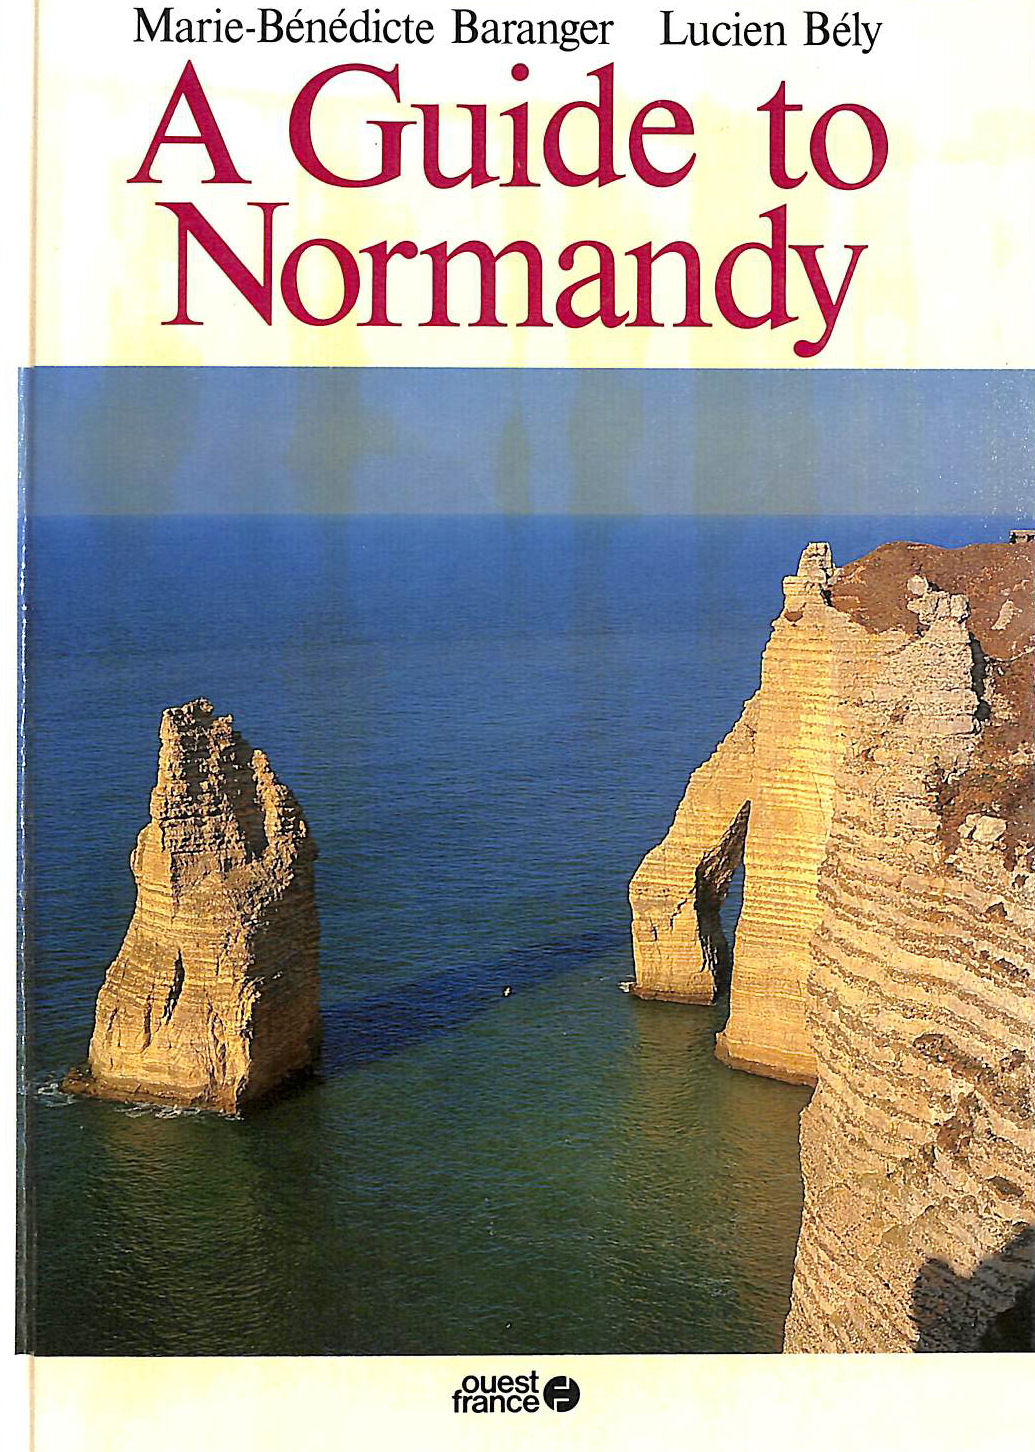 MARIE-BENEDICTE BARANGER, LUCIEN BELY ET AL - Guide to Normandy